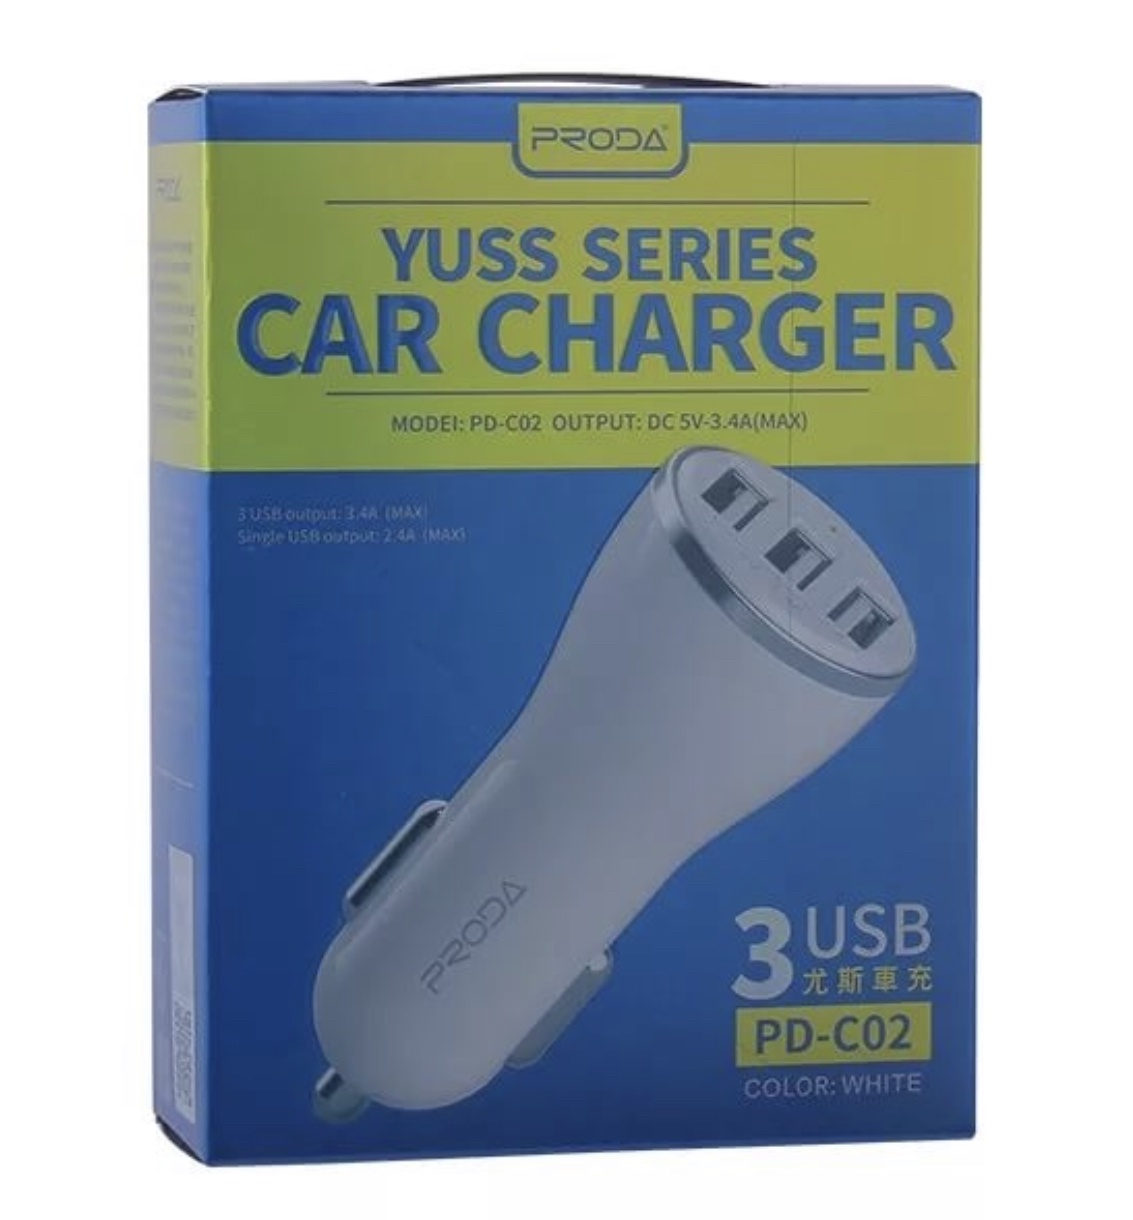 фото Автомобильное зарядное устройство proda Car charger yuss series PD-C02, YSC-2118, белый